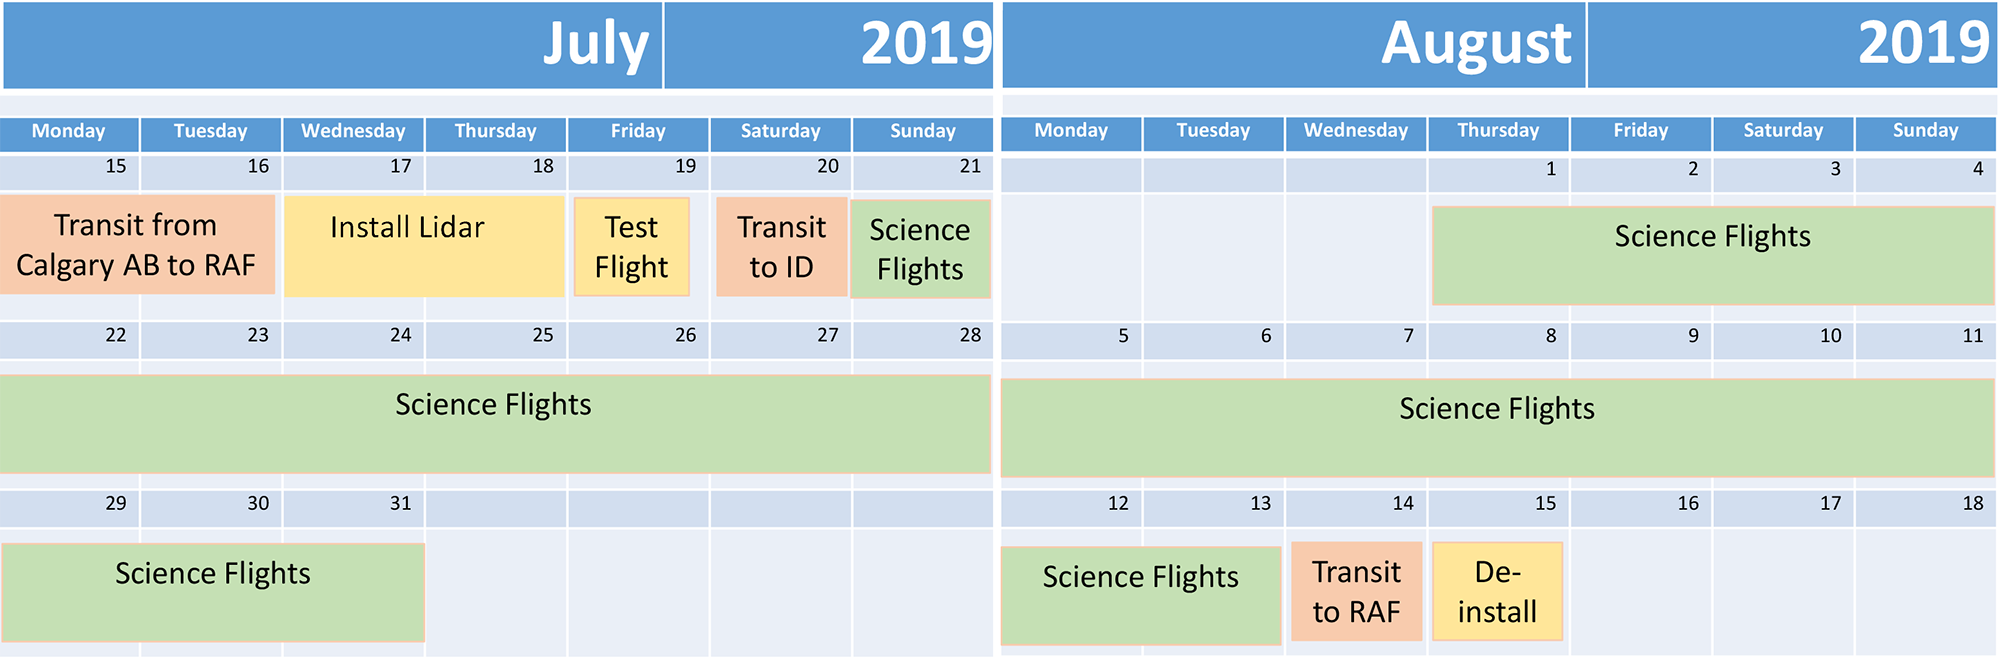 NOAA-MET Twin Otter calendar for July - August 2019